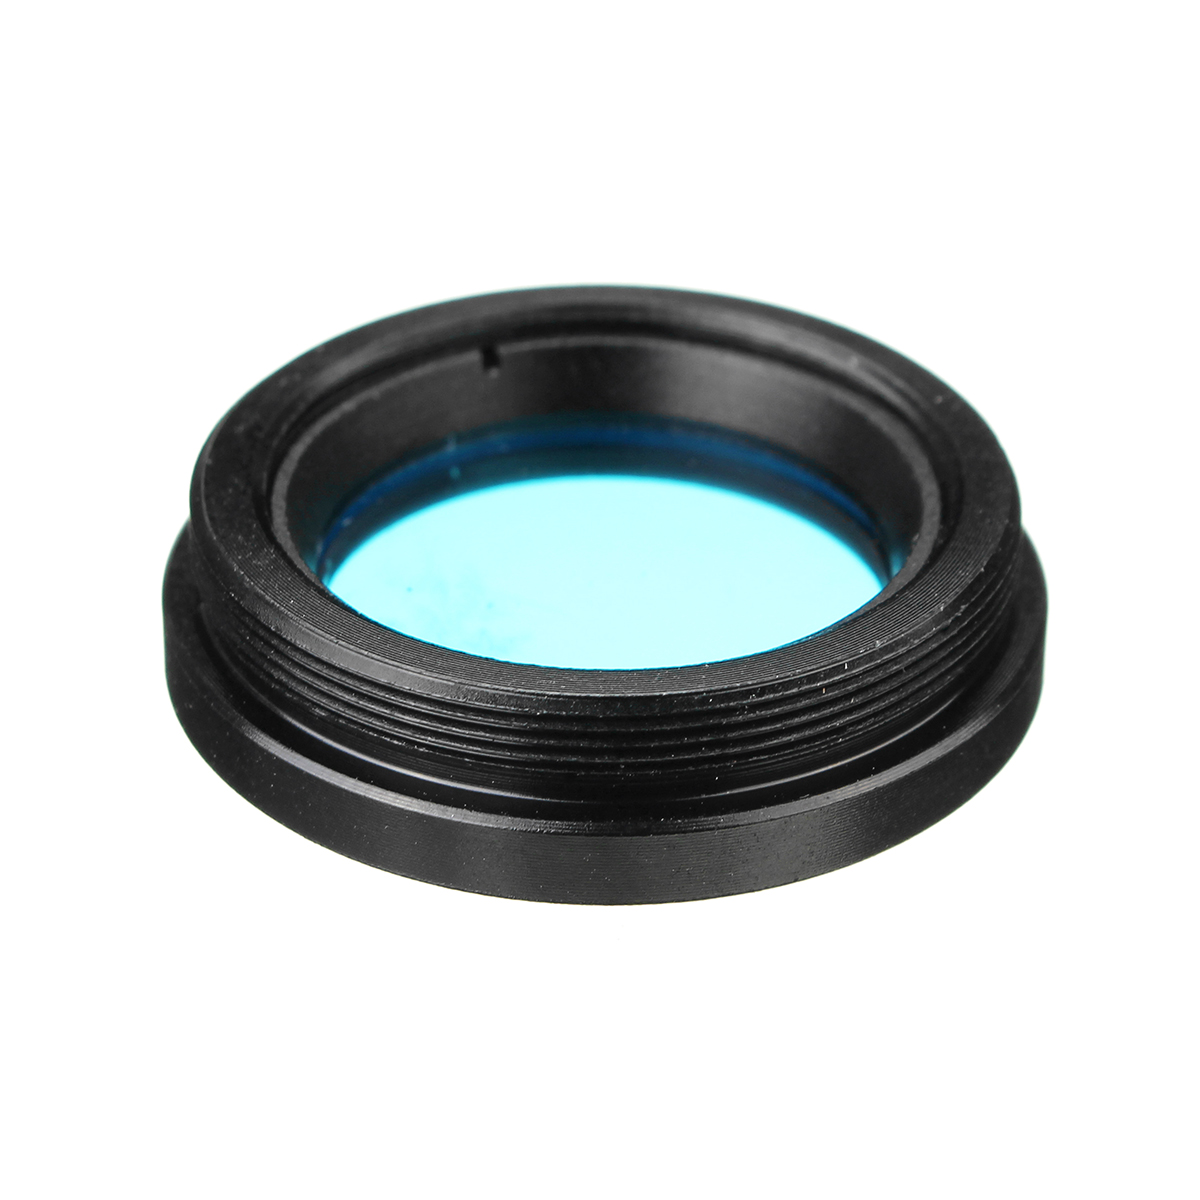 8Pcsset--125inch-Lens-Filter-Kit-Nebula-Filter-Moon-Sun-Filter-For-Telescope-Eyepiece-Accessories-1412189-9